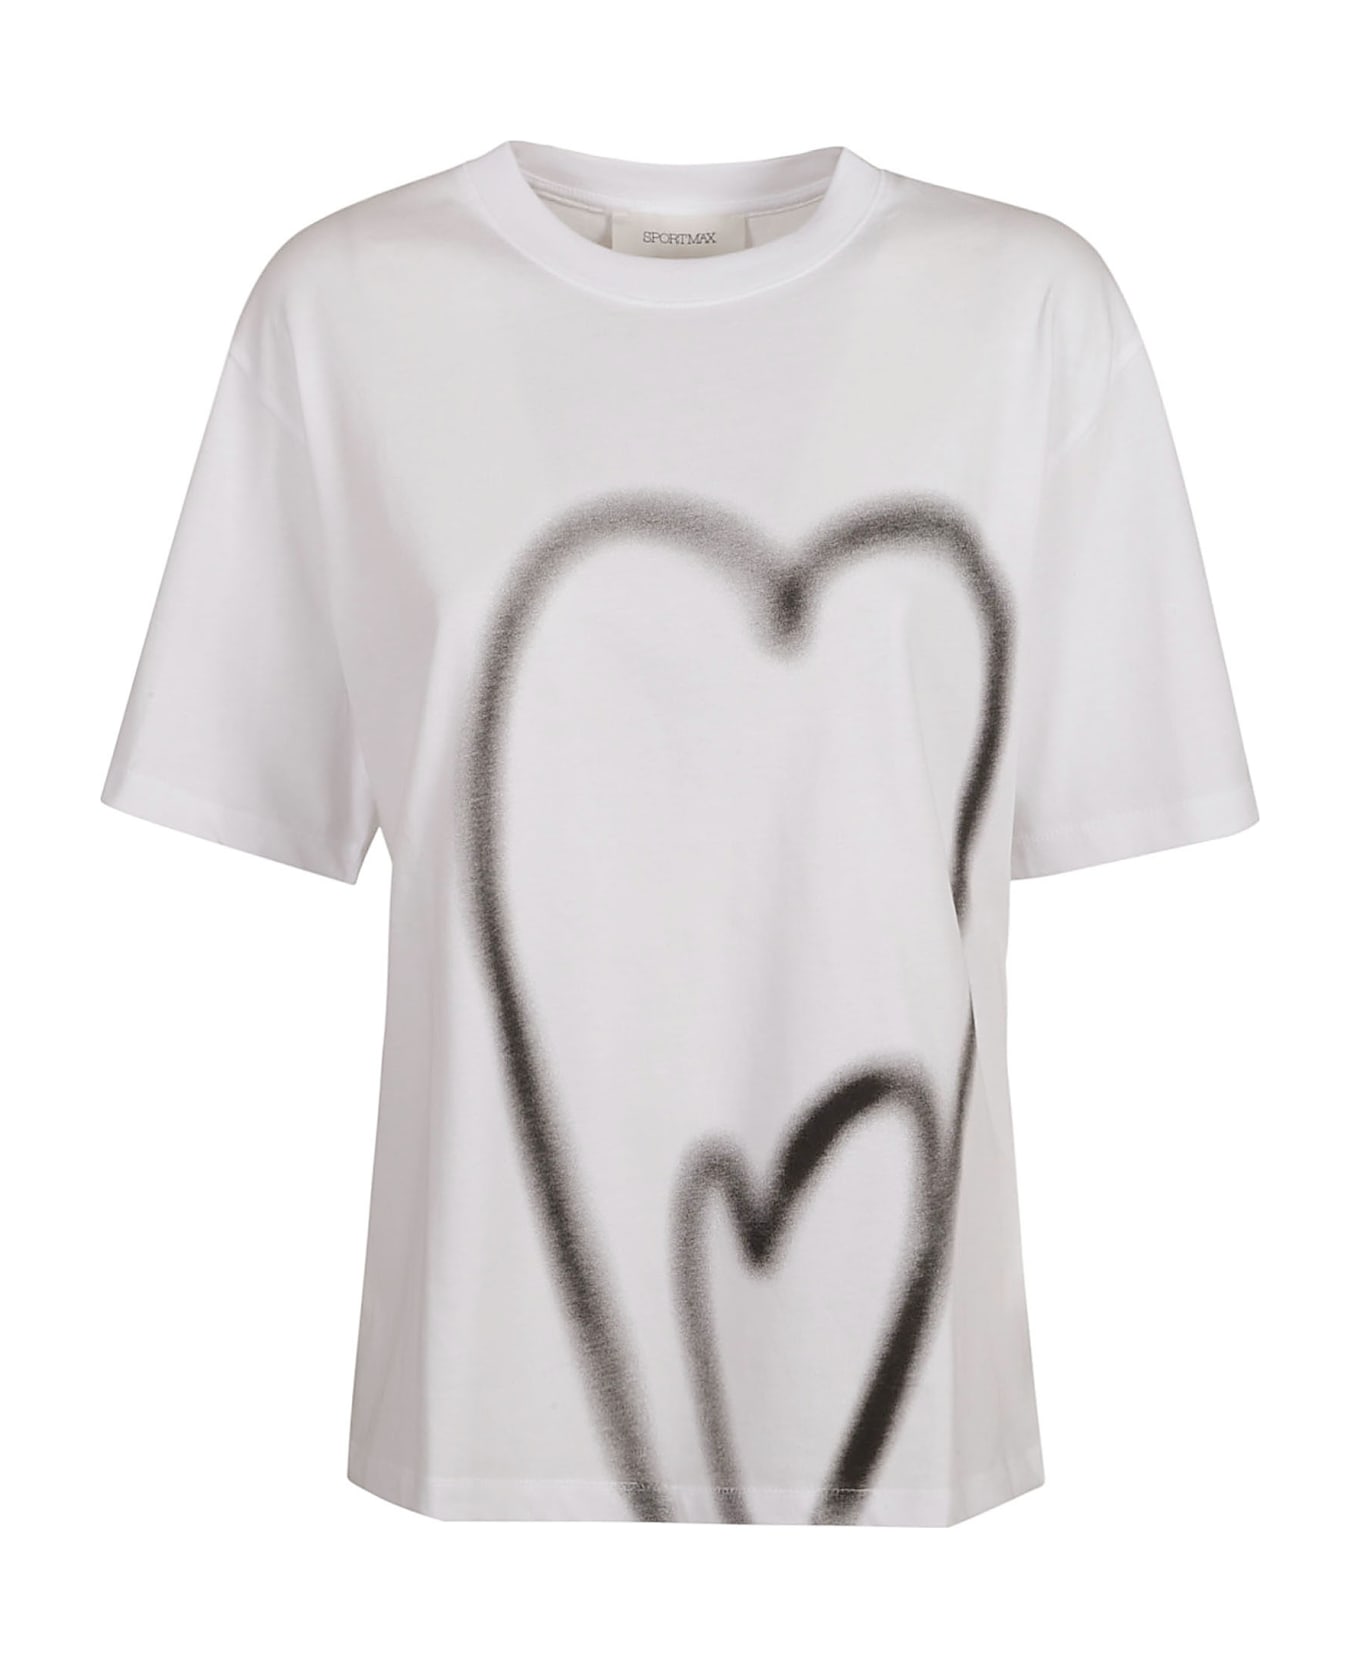 SportMax Luis T-shirt - White Tシャツ